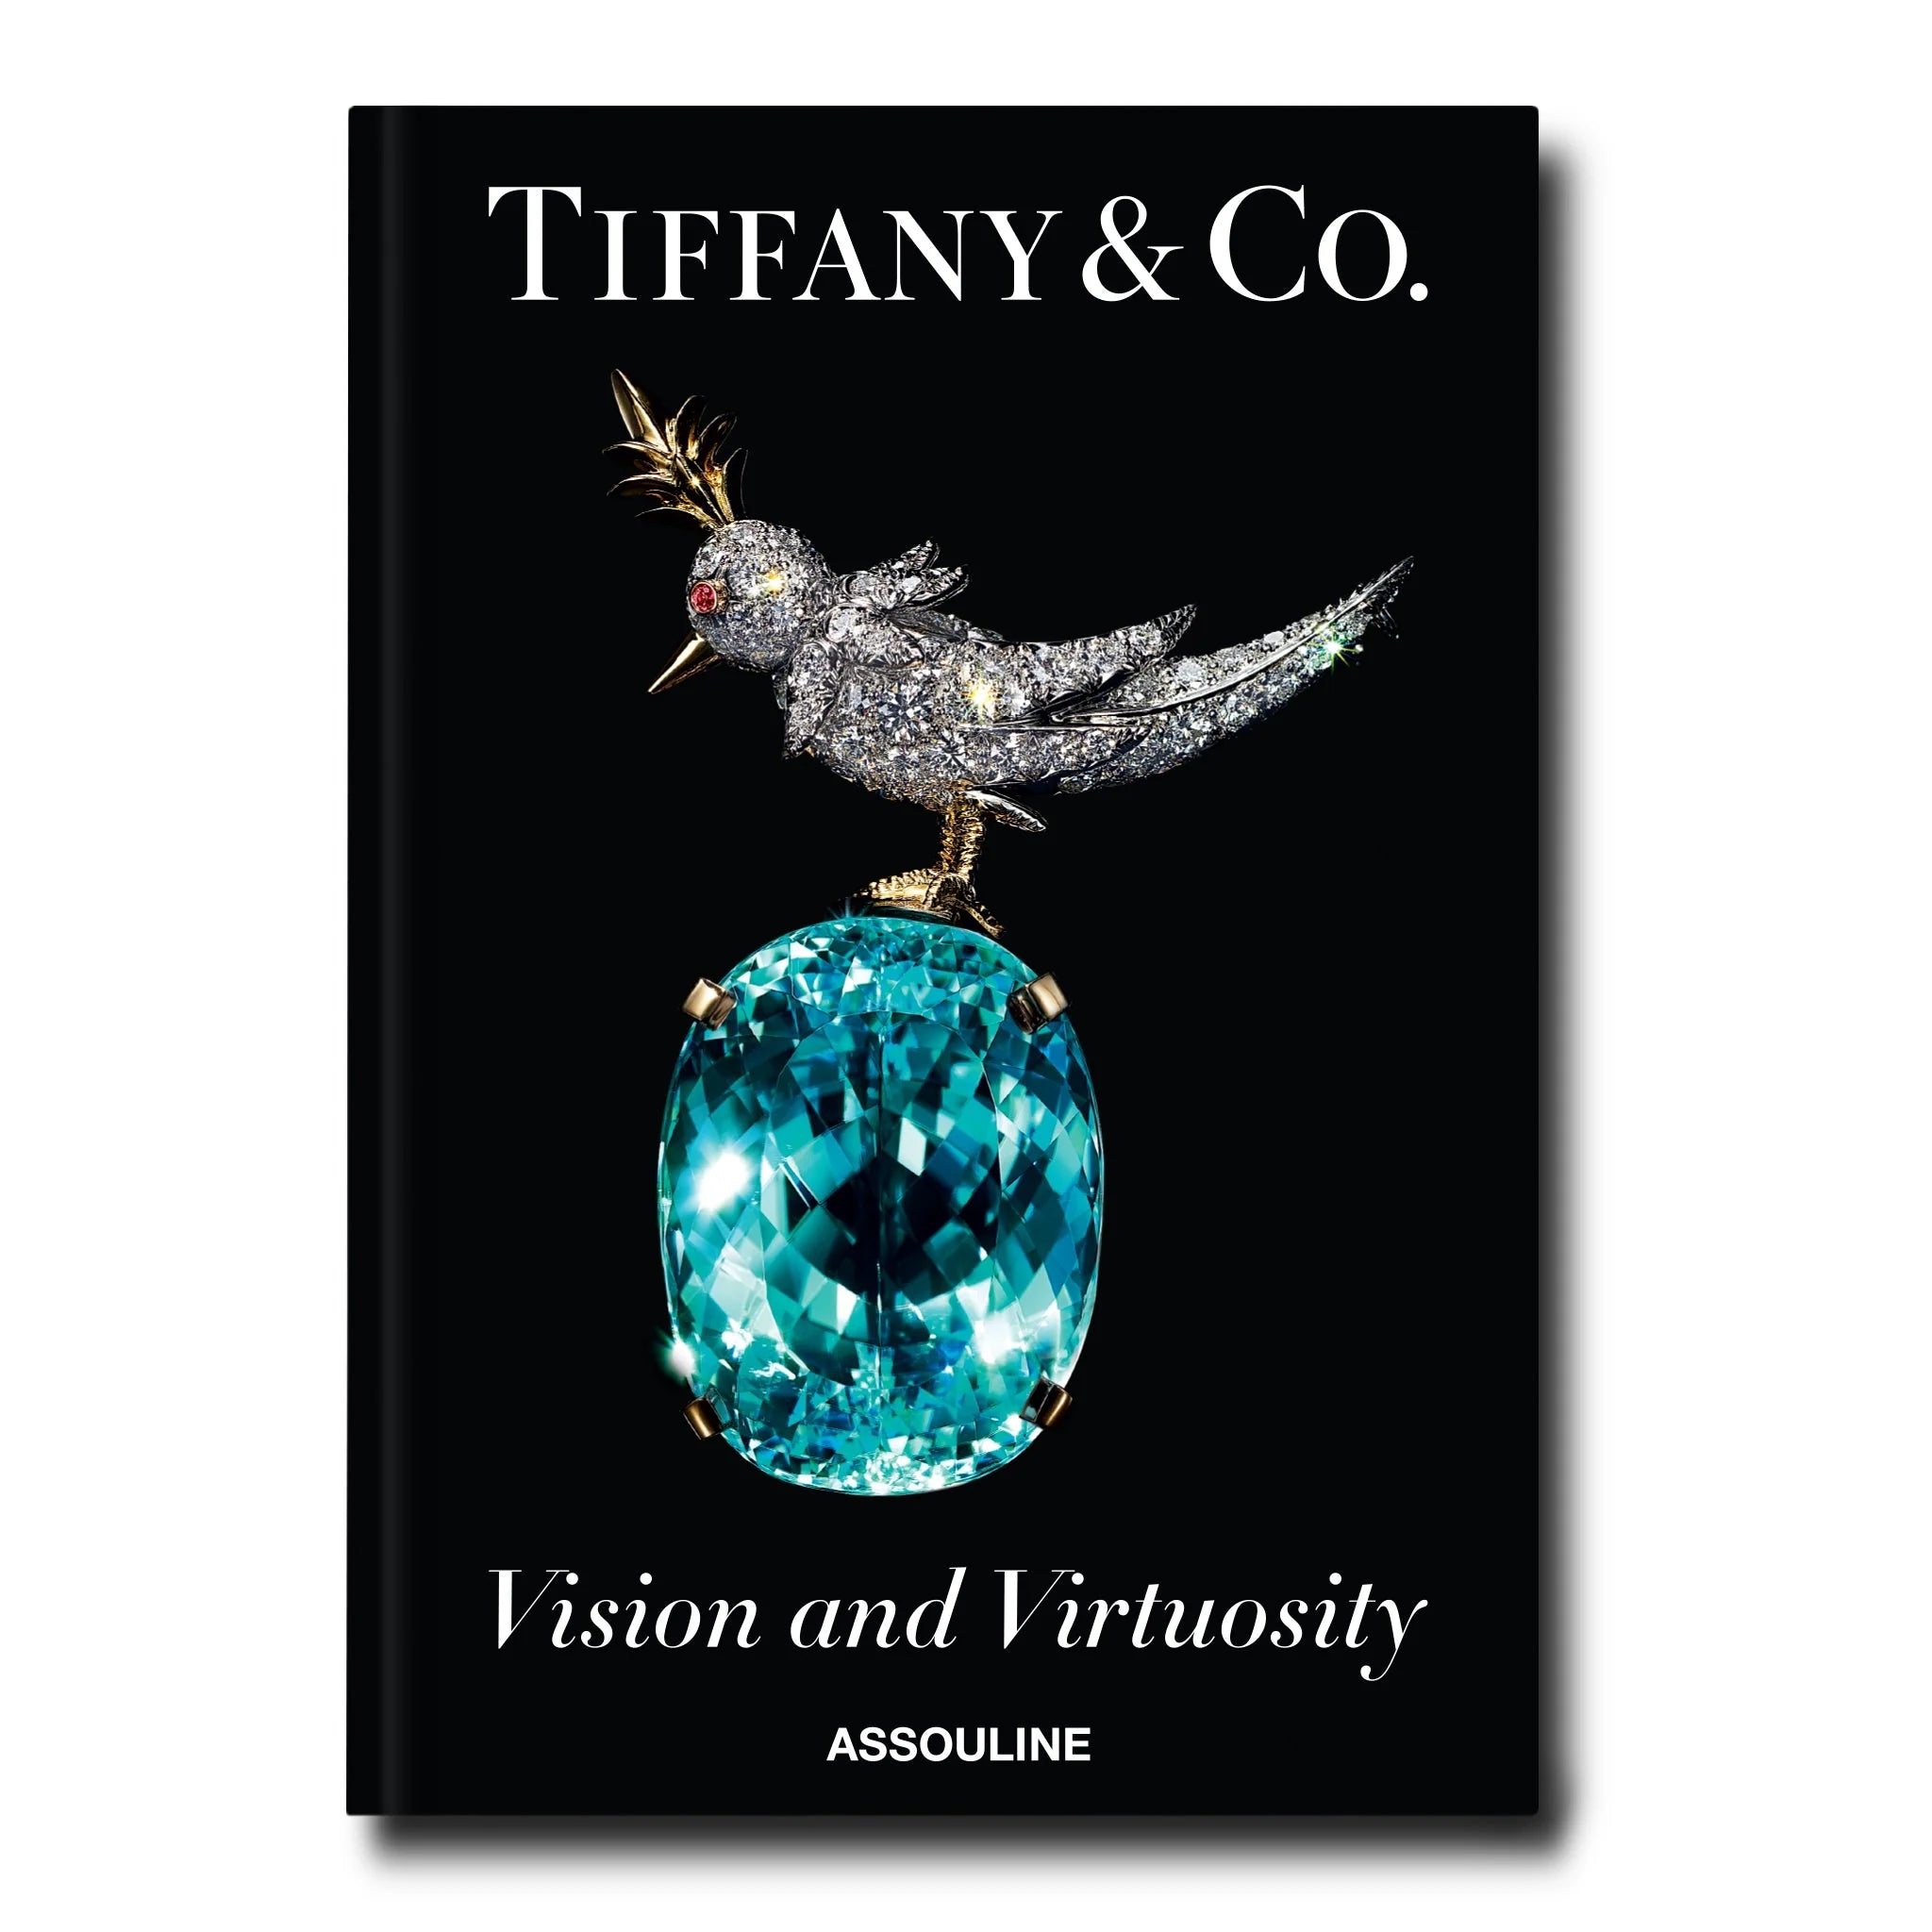 TIFFANY: VISION & VIRTUOSITY, libro decorativo sobre joyas de Assouline